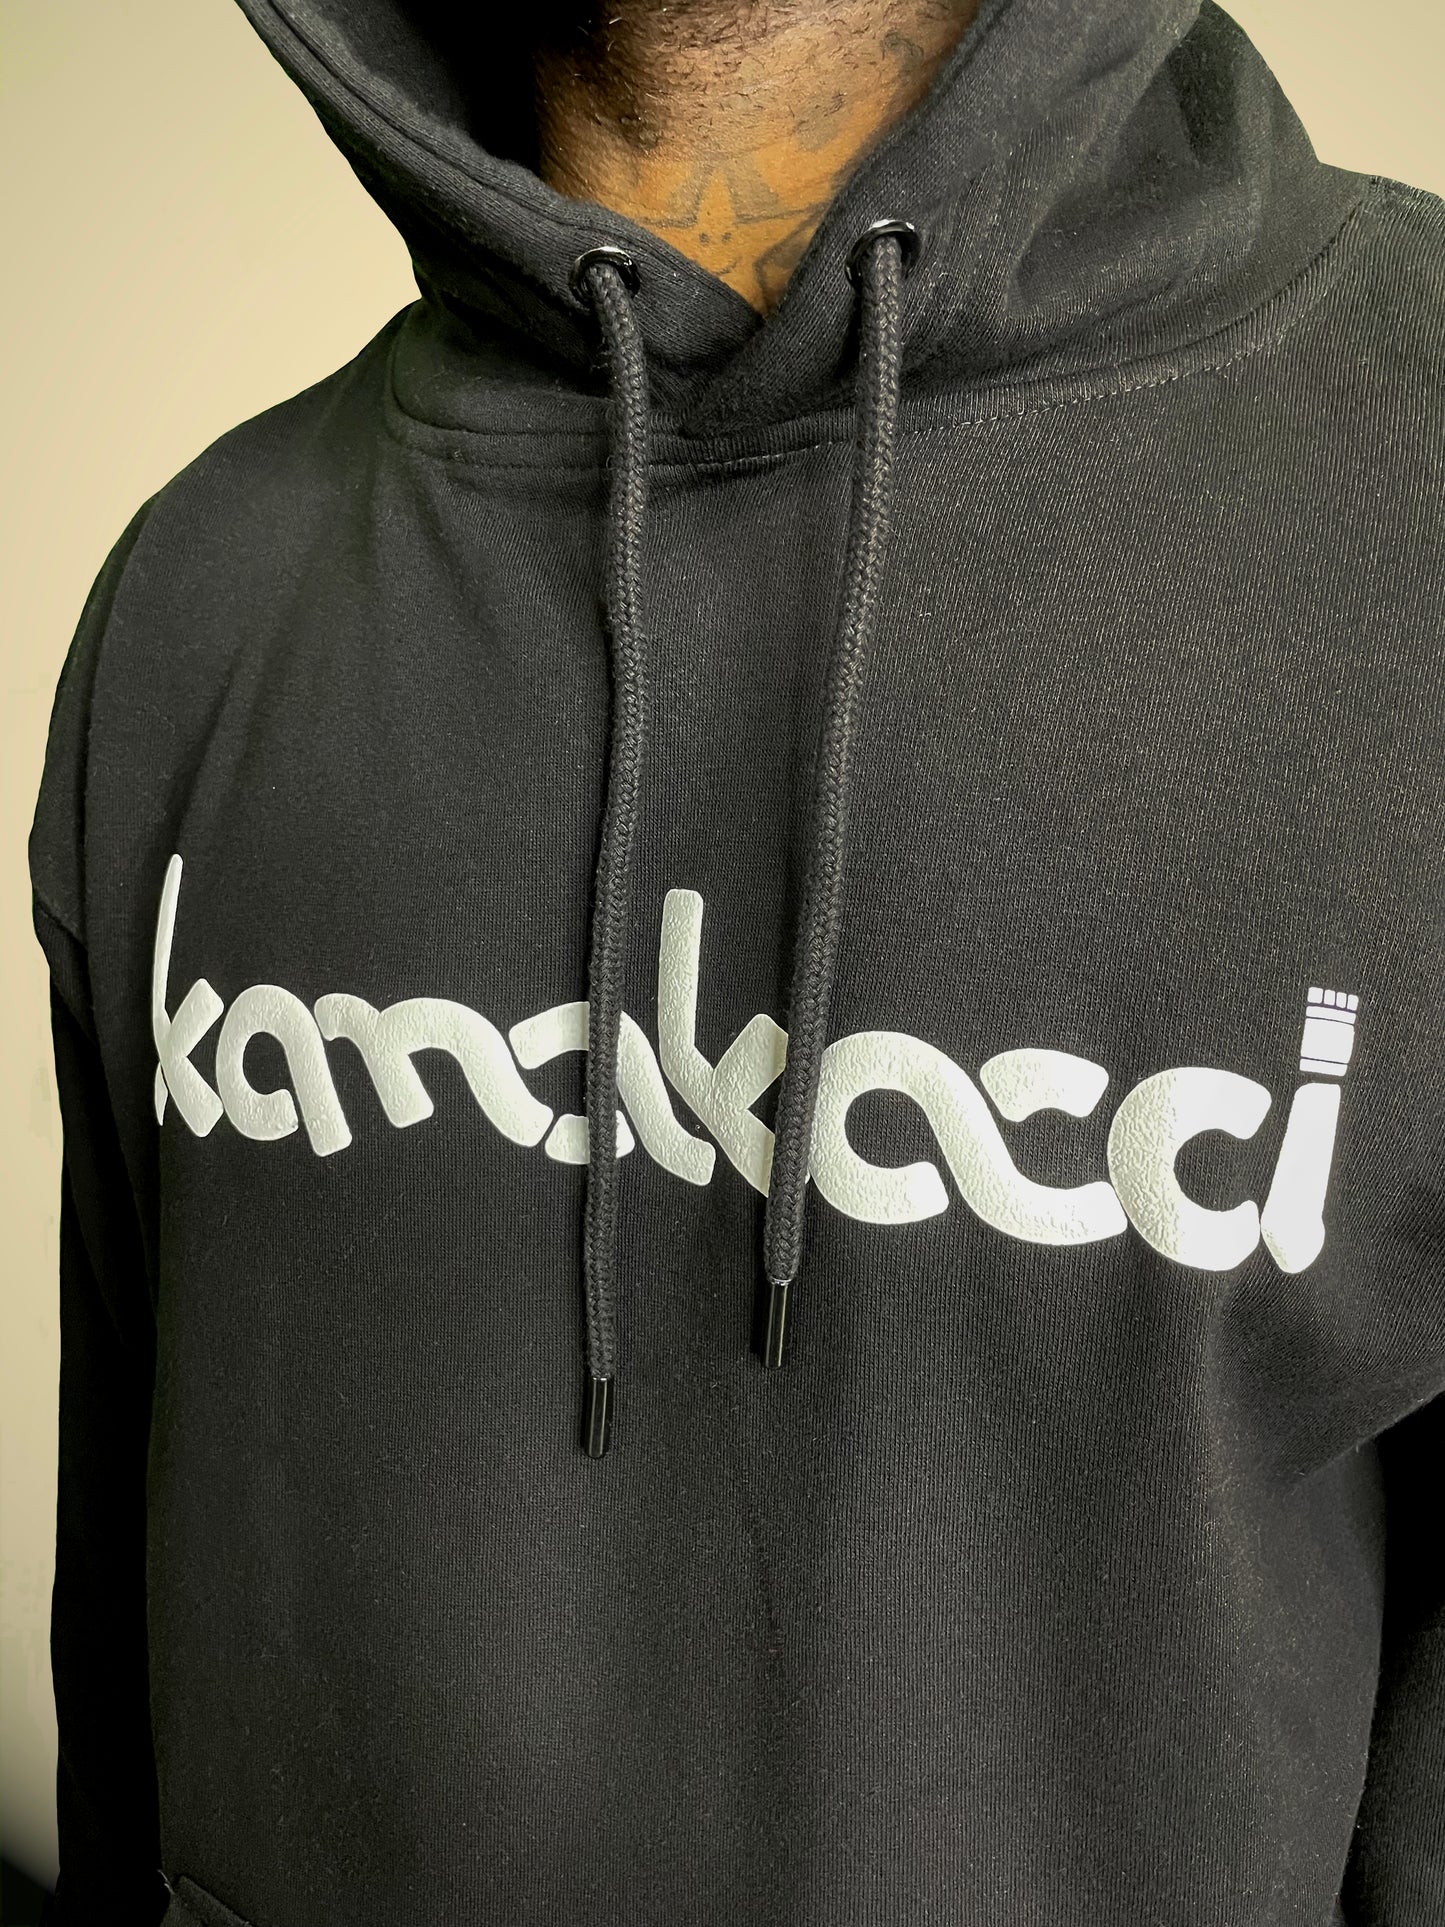 Kamakacci Signature Hoodie - Black